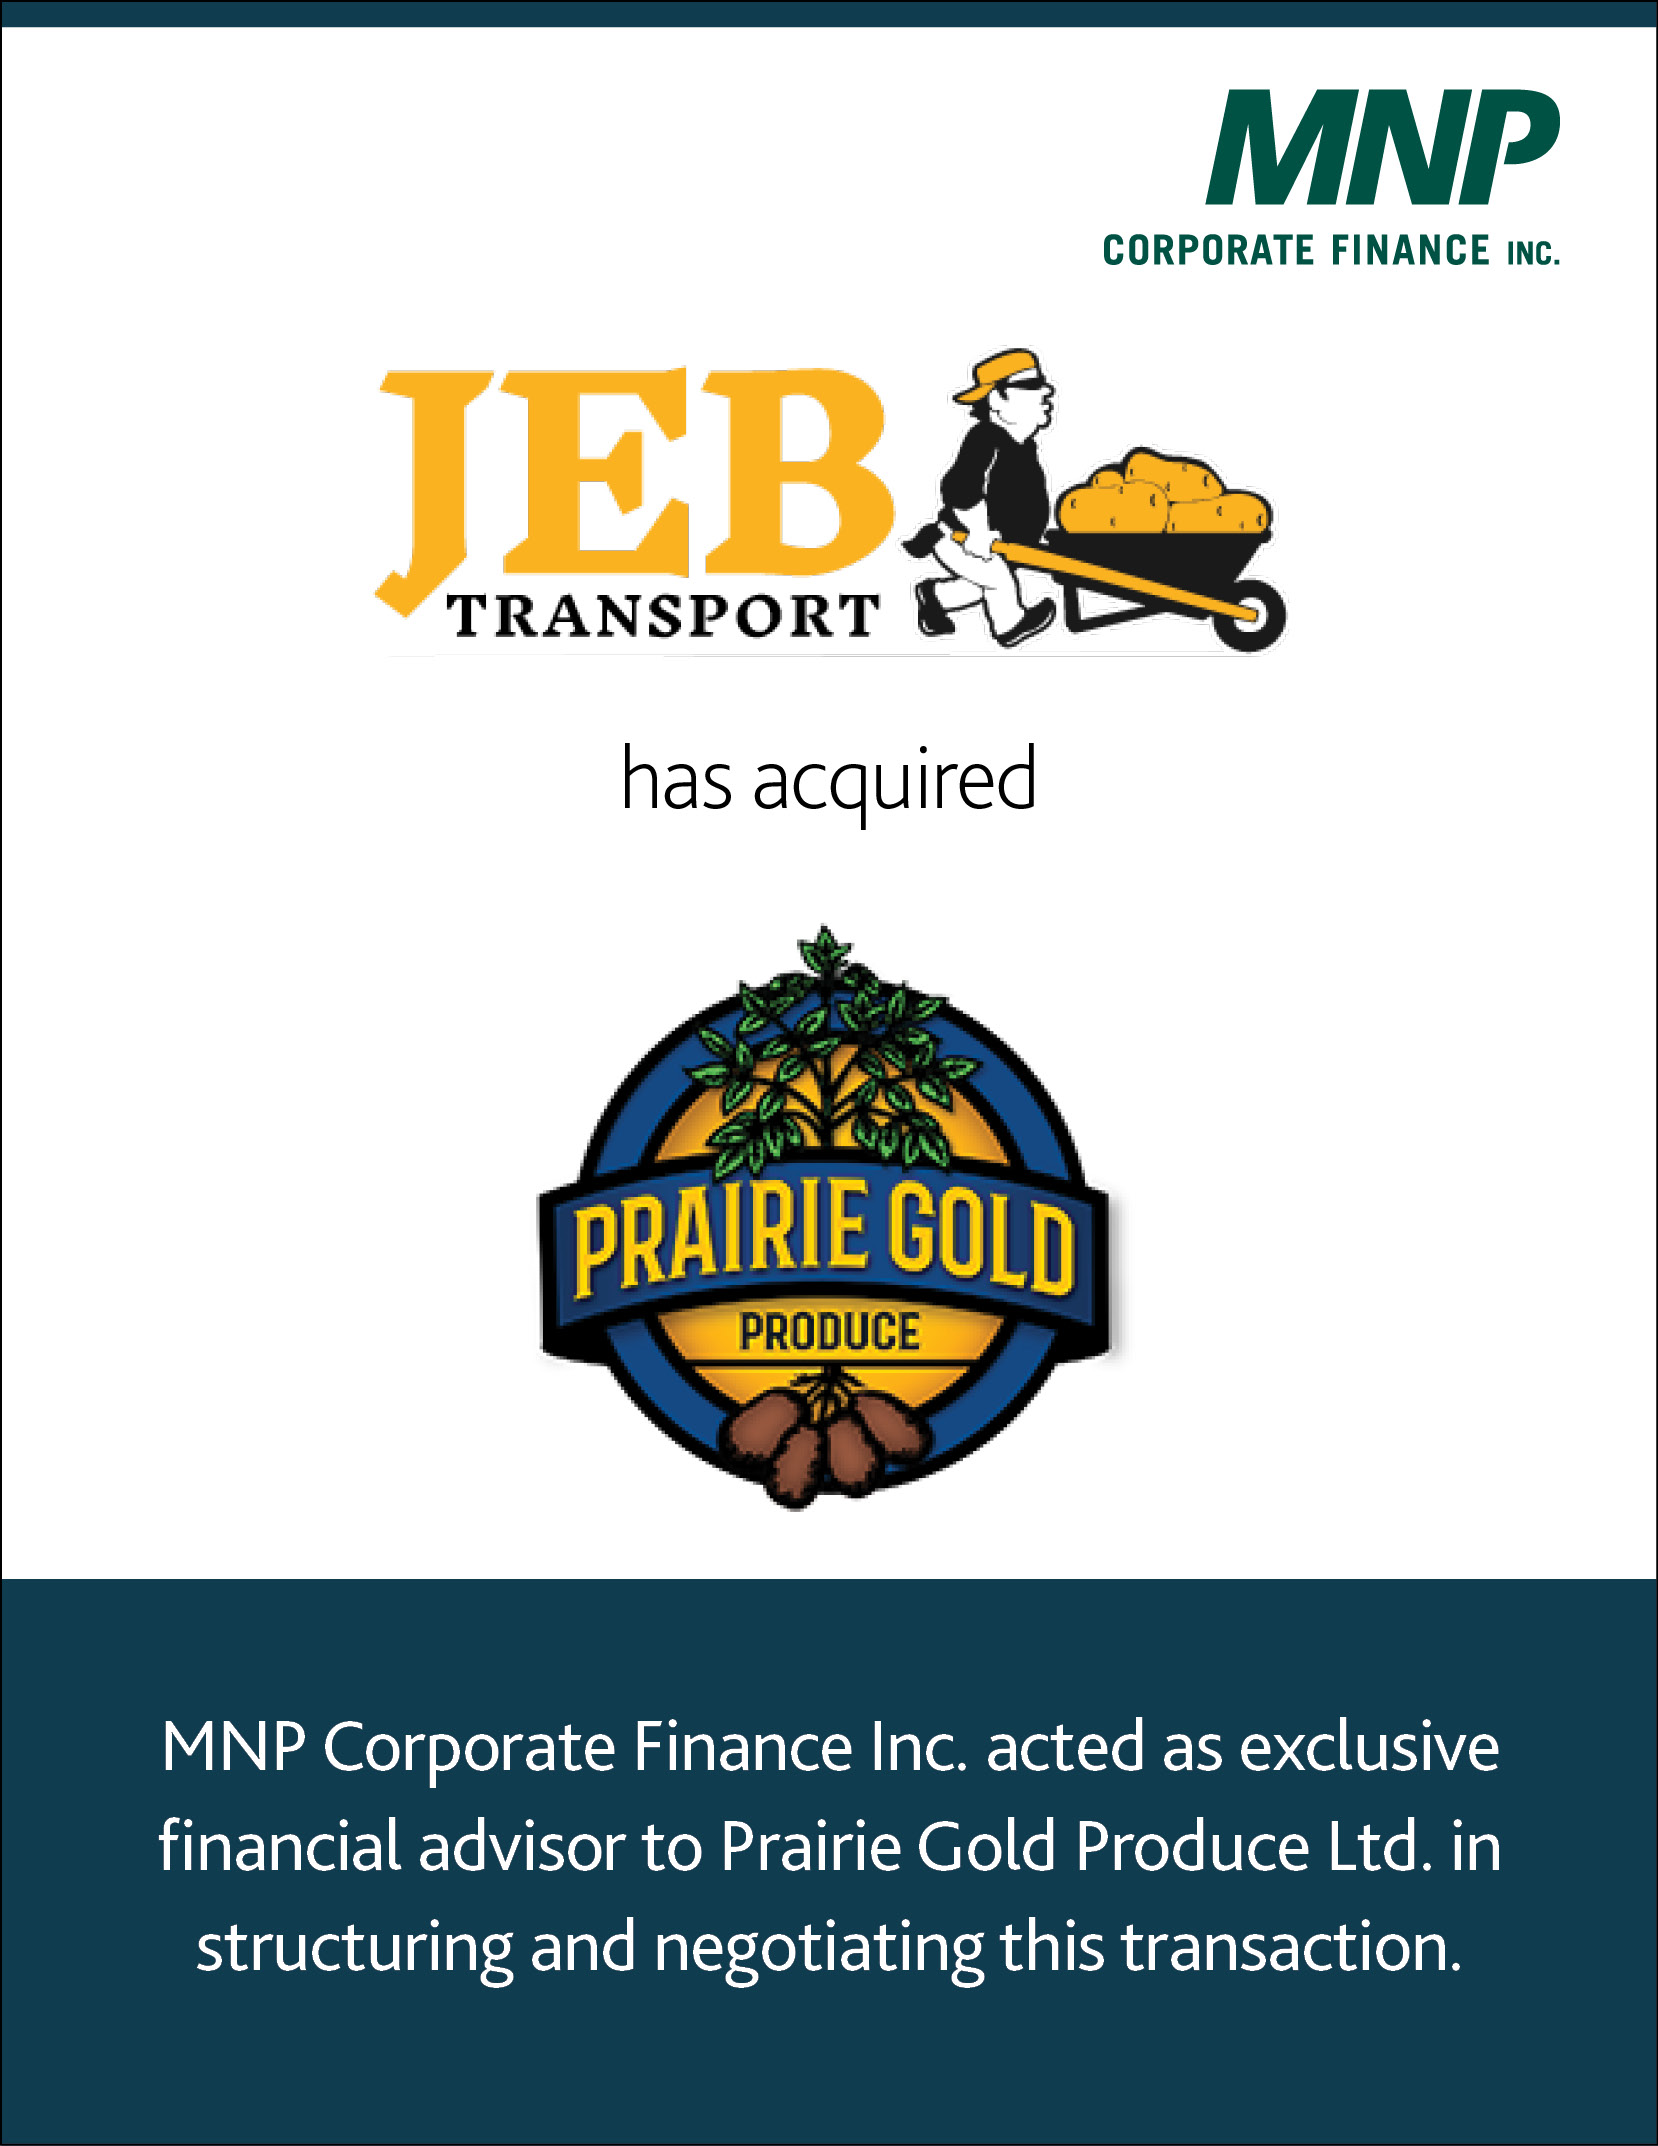 JEB & Prairie gold logos